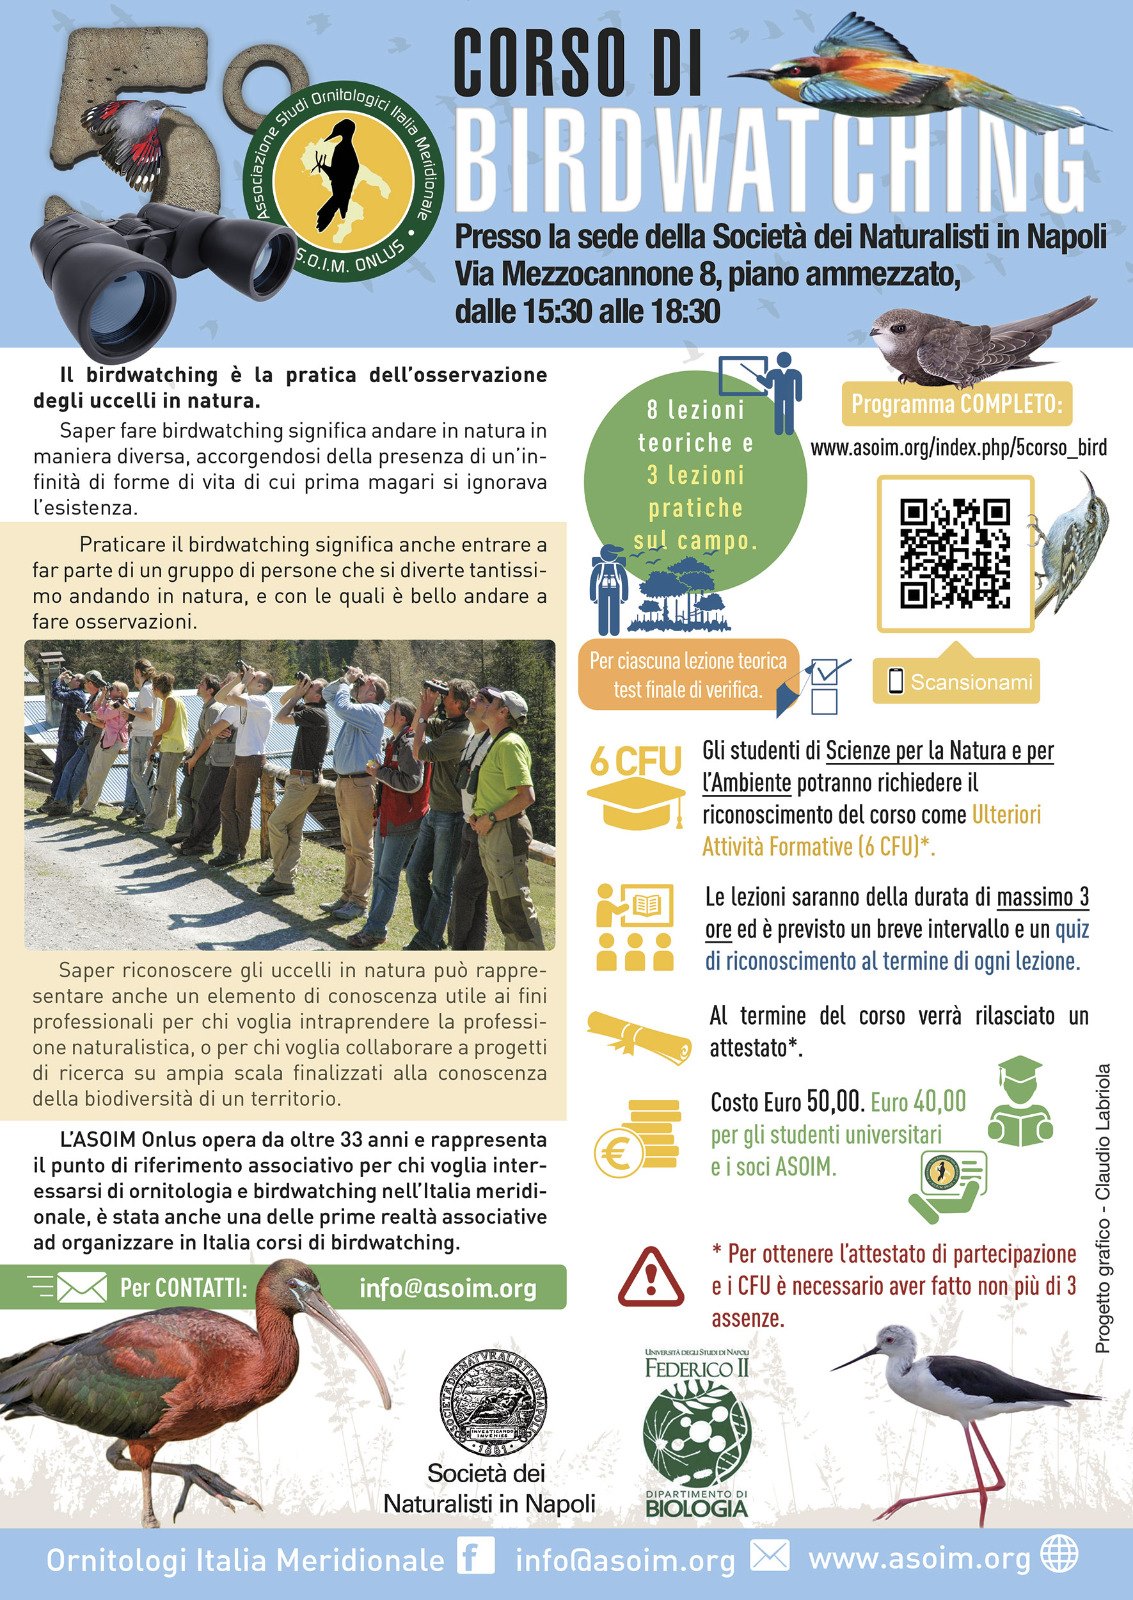 L’ASOIM organizza un Corso di birdwatching